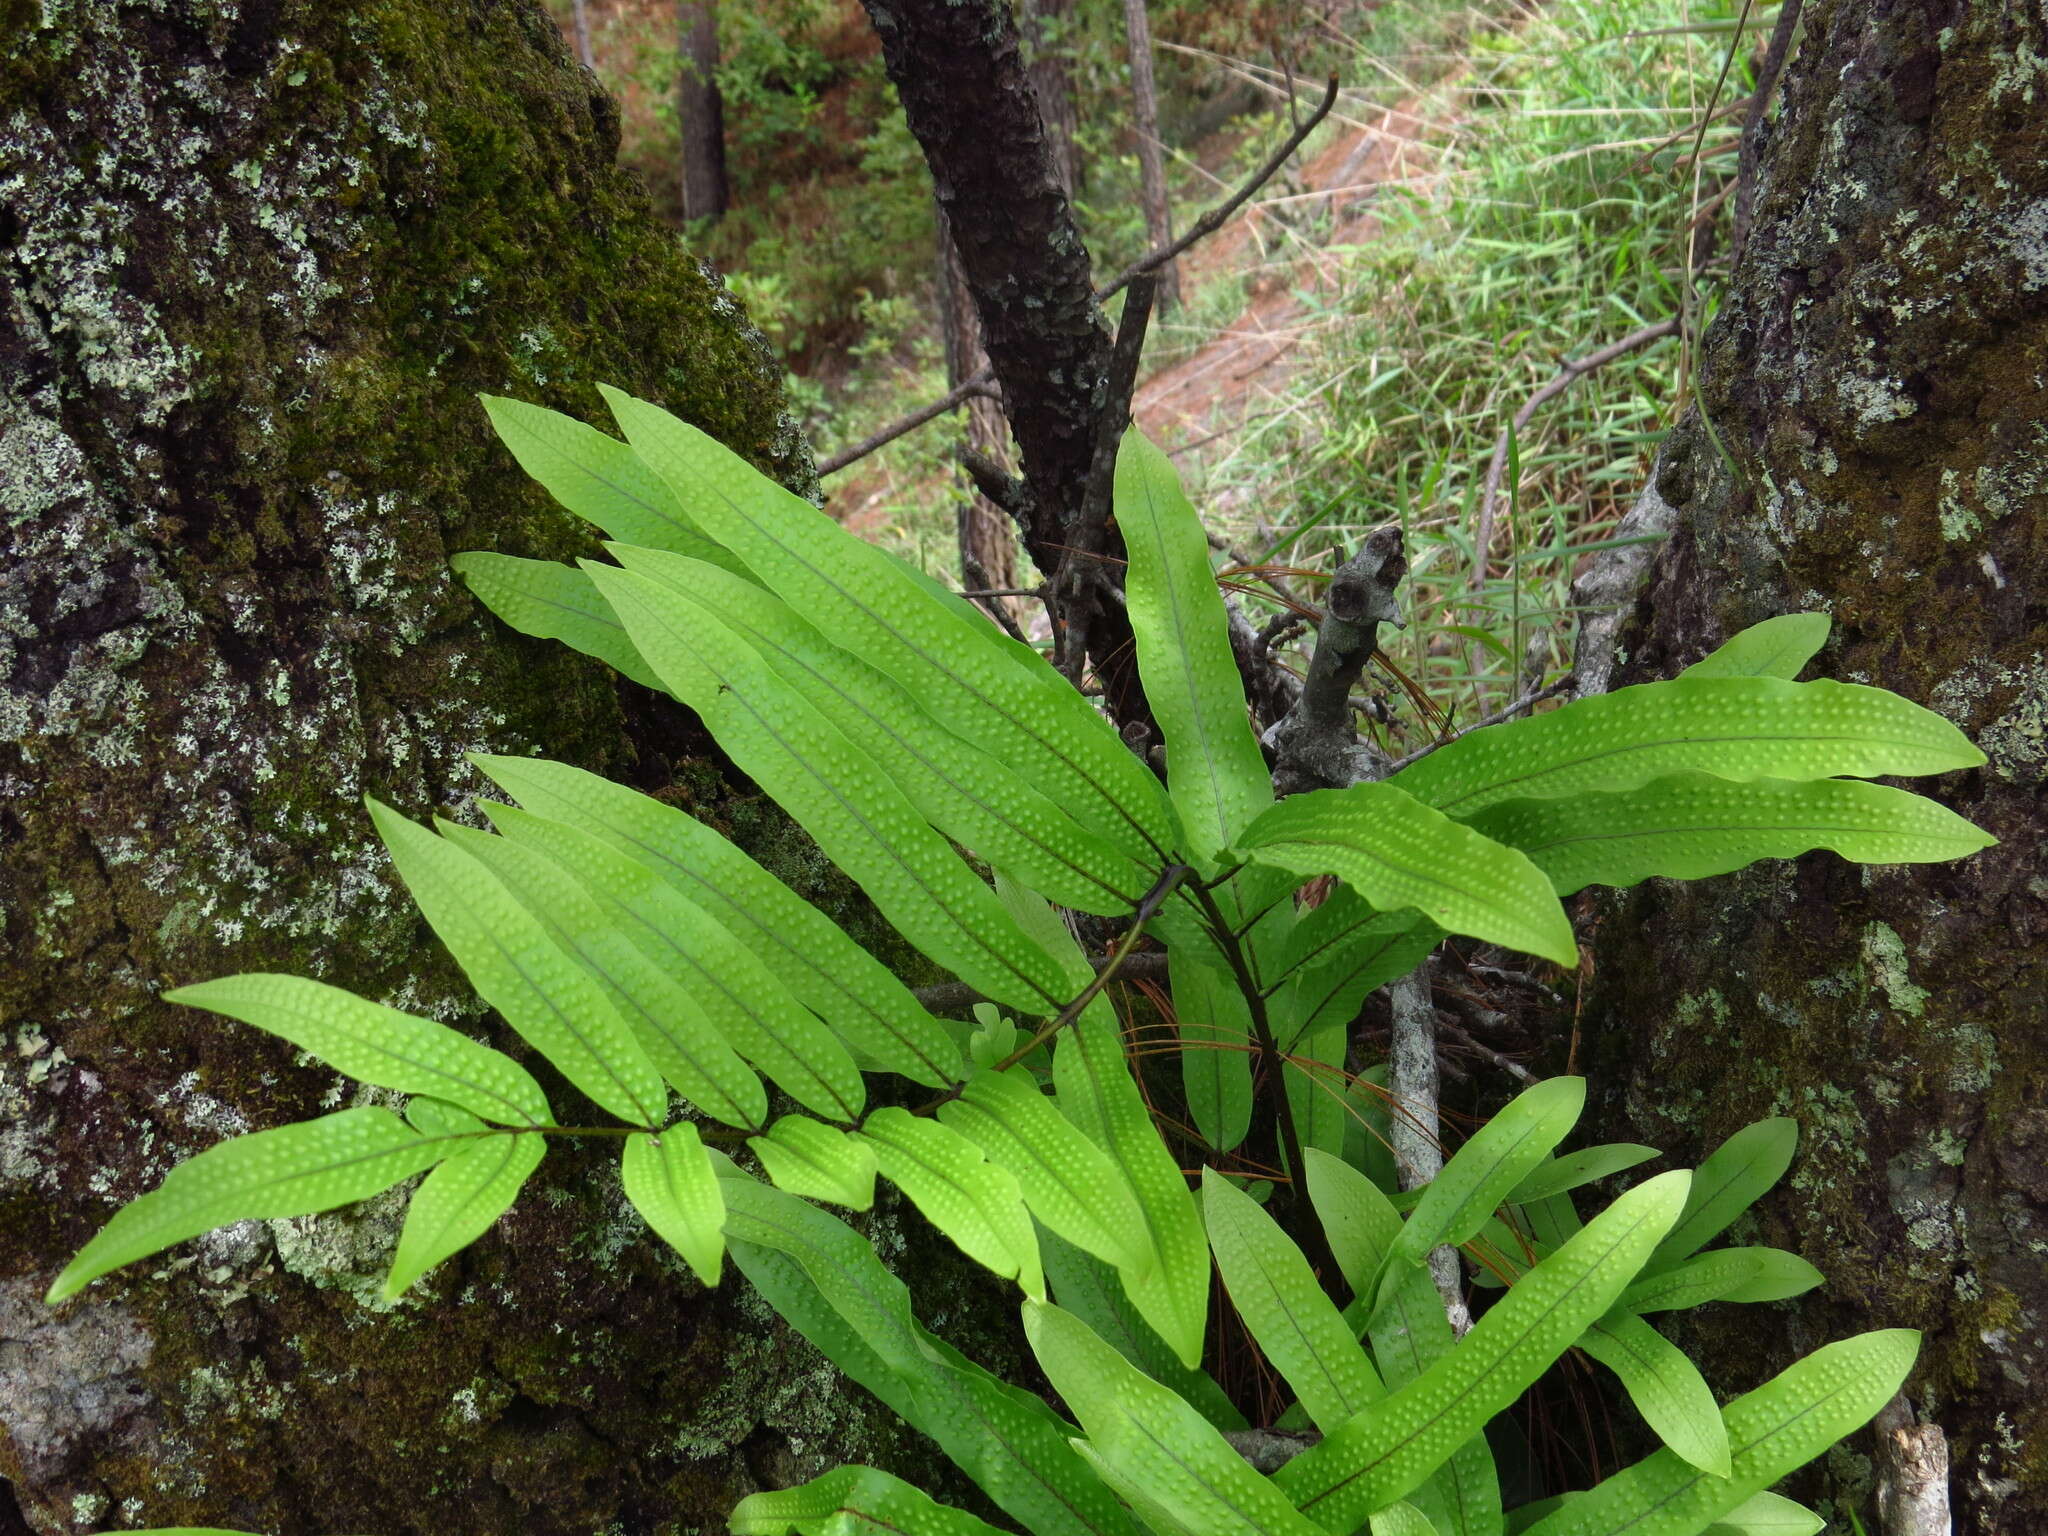 Image of anglevein fern